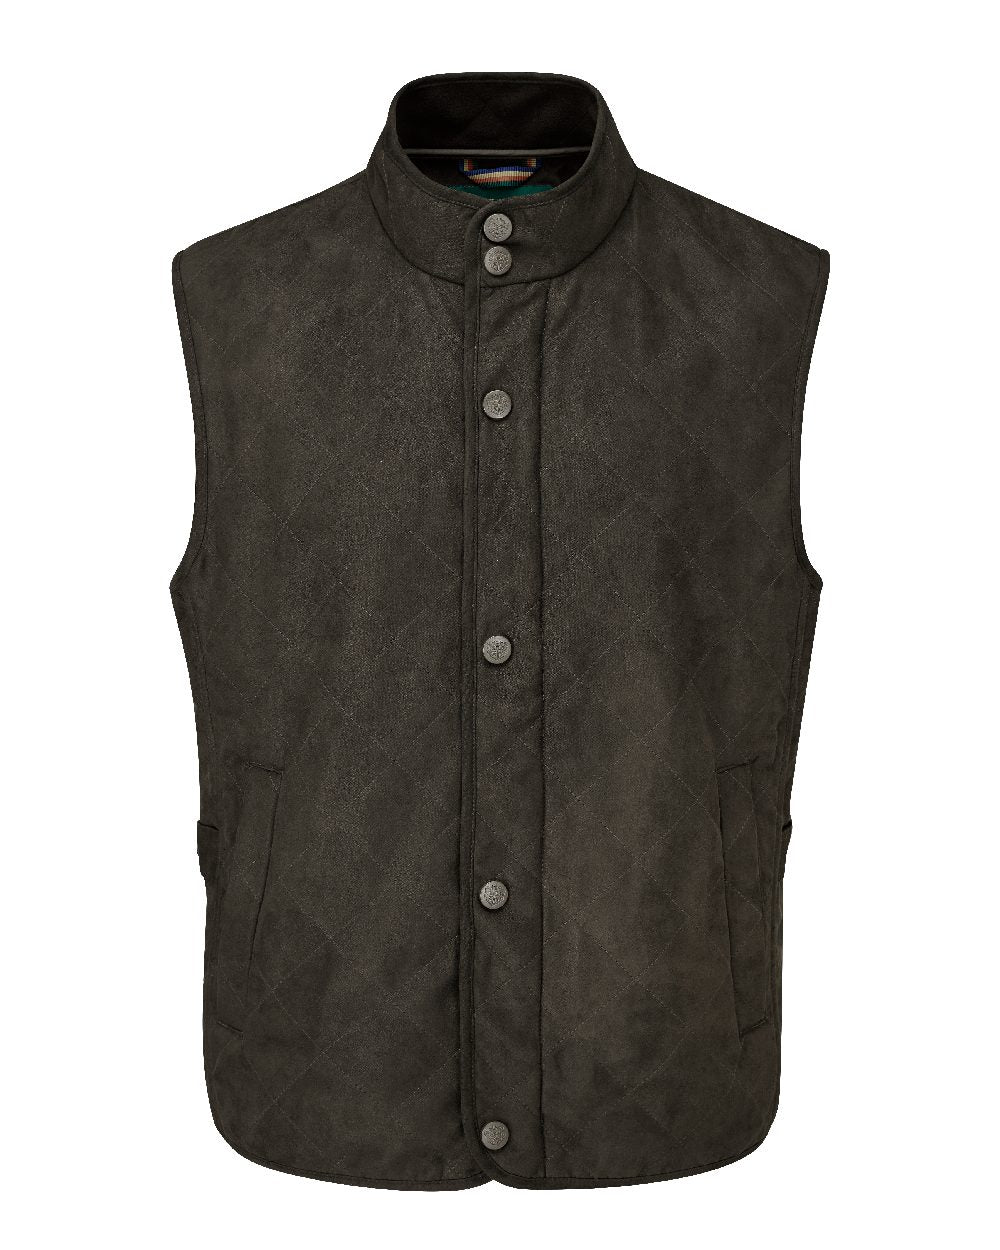 Shop Unisex Plain Oversized Fly-Fishing Vest Vests & Gillets by